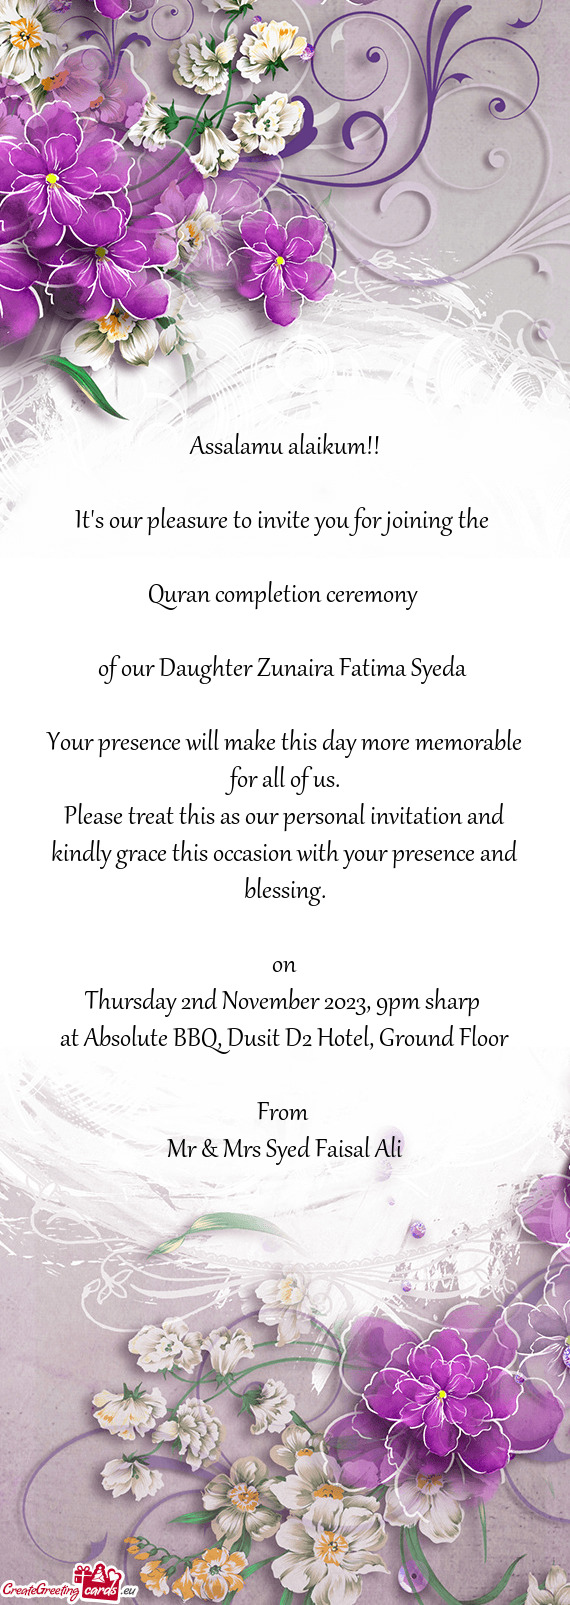 Of our Daughter Zunaira Fatima Syeda